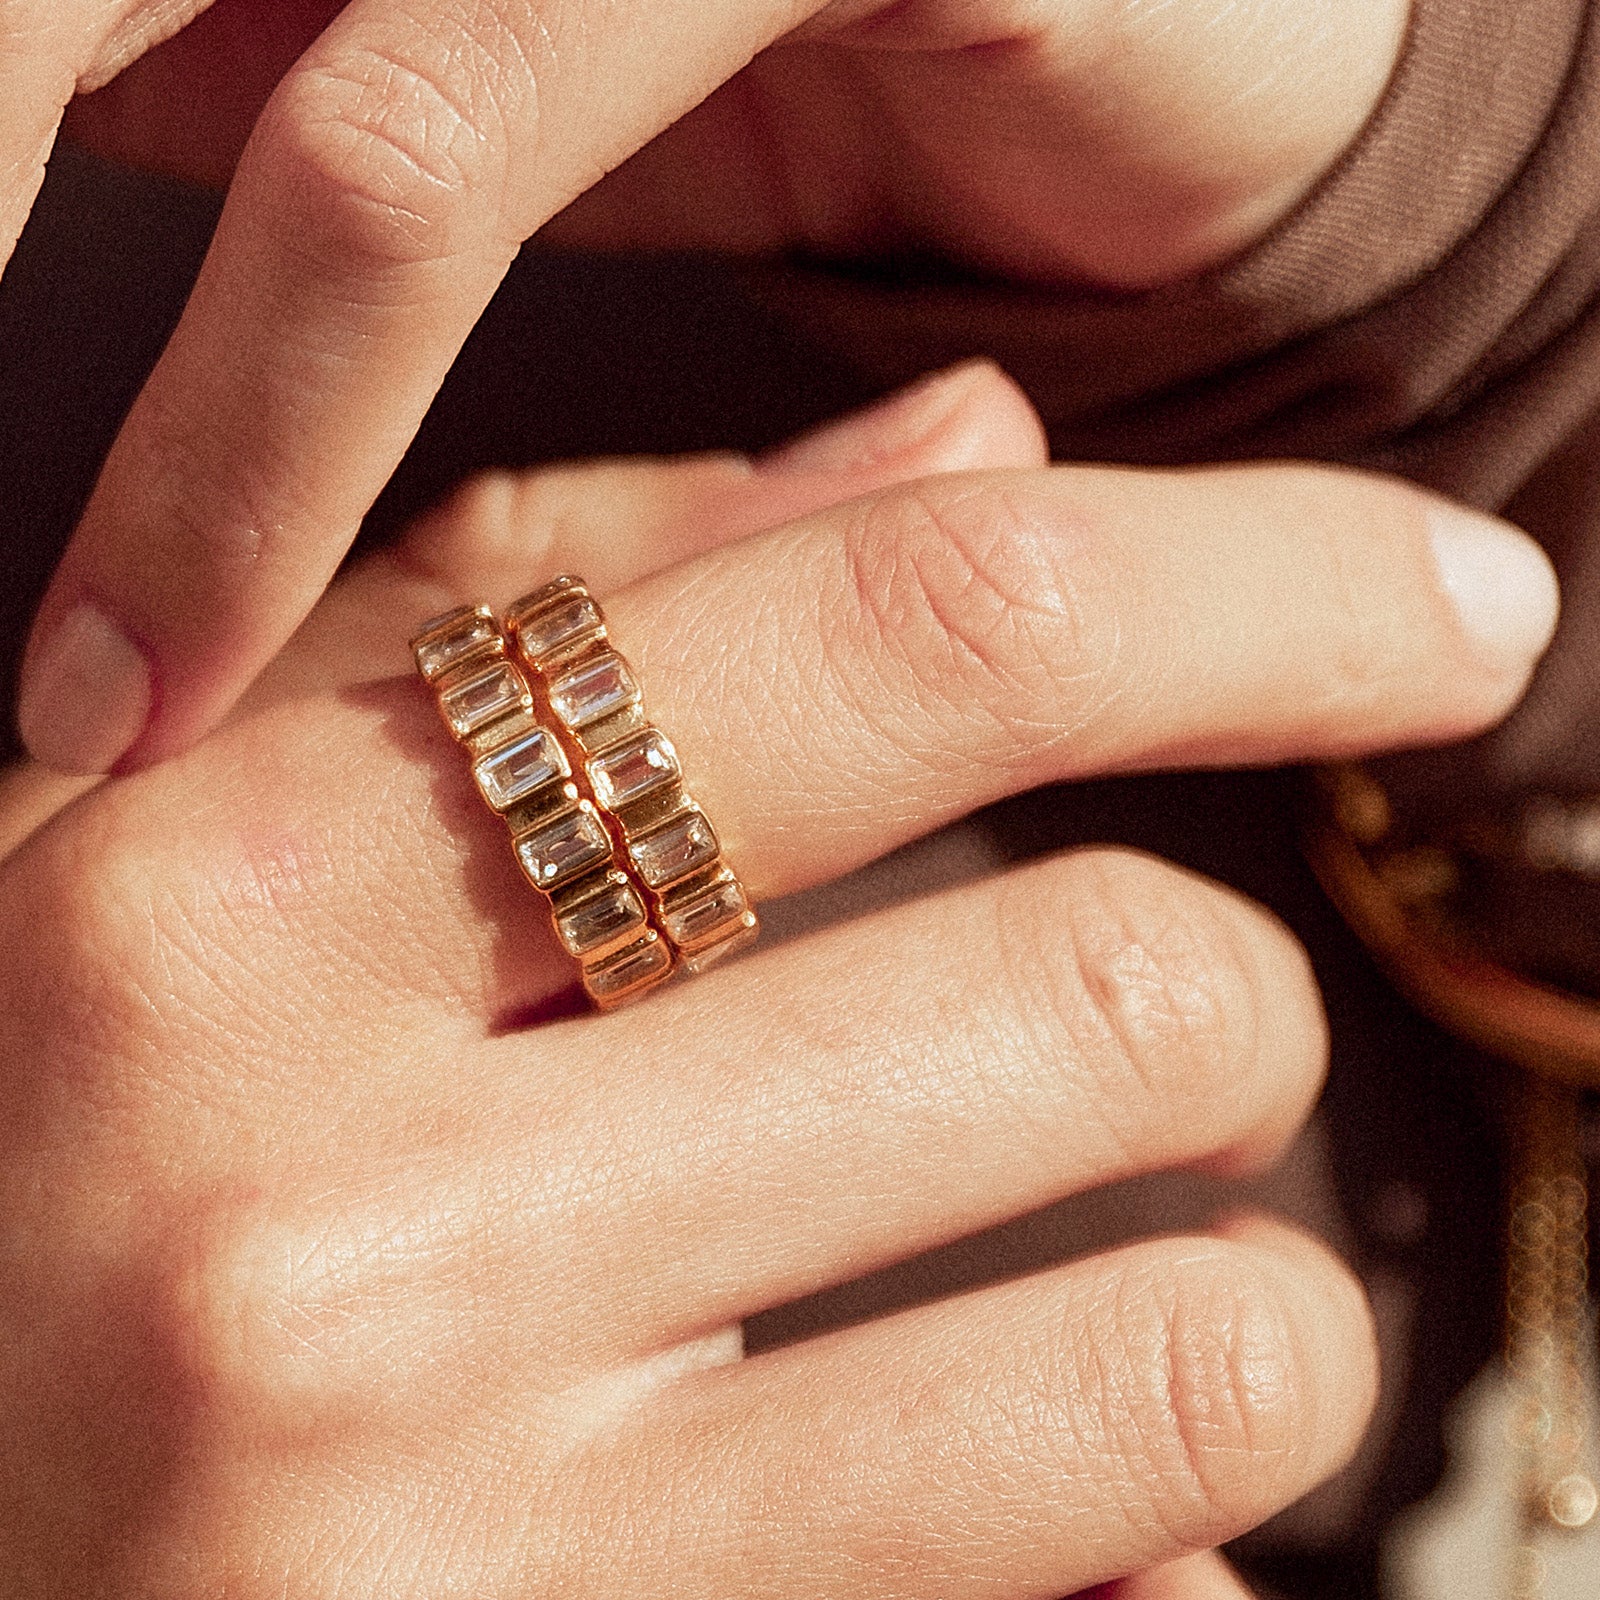 Anastasia Gold Ring